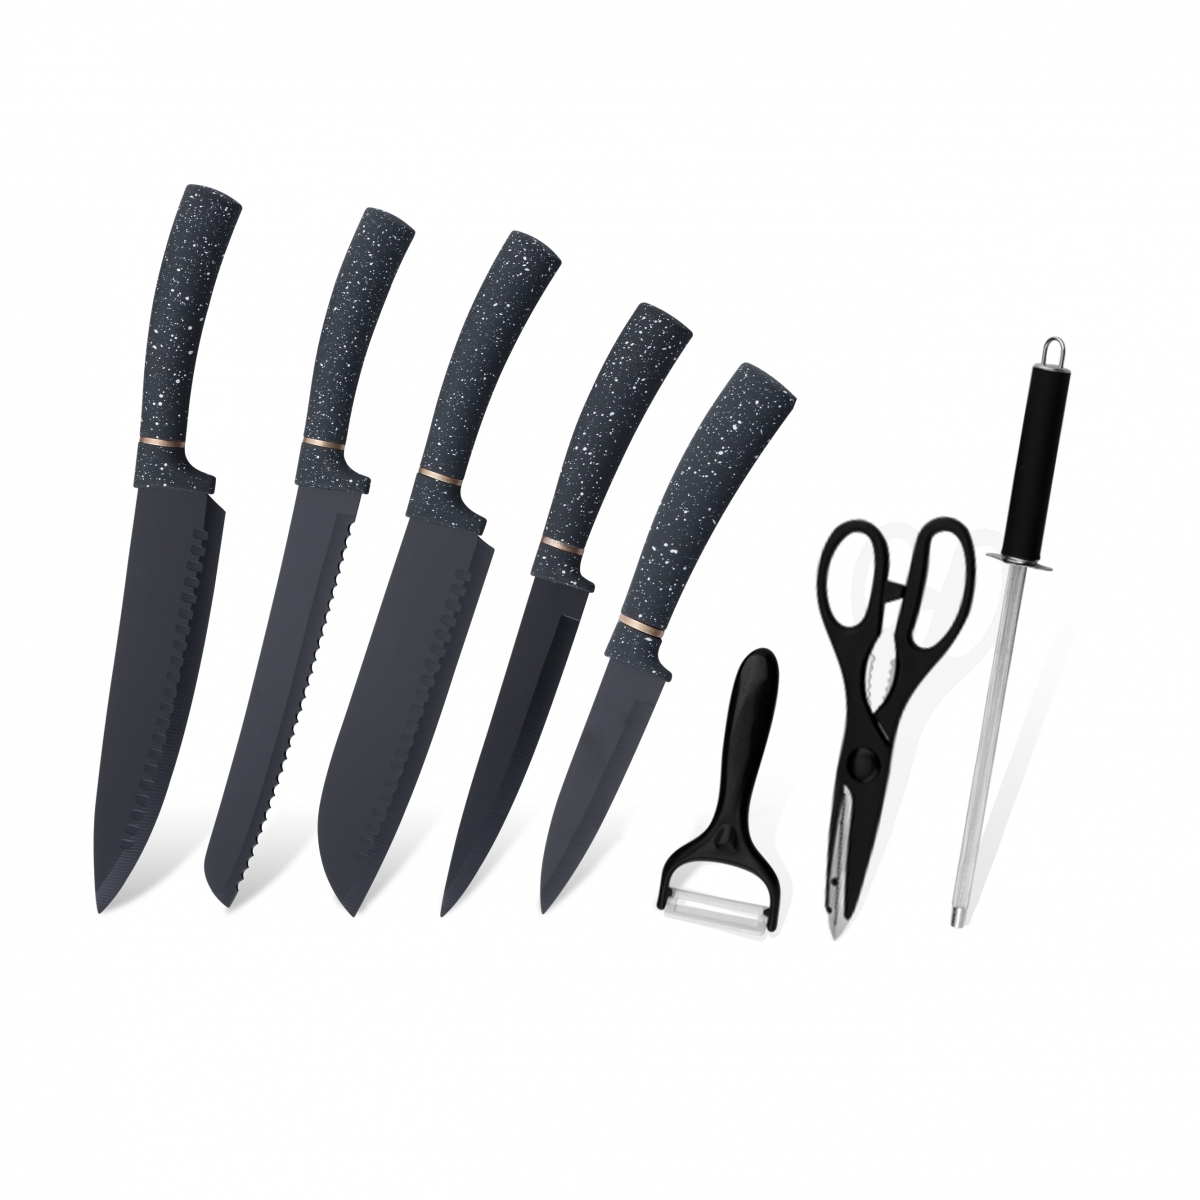 К125-Кухињски сет кухињских ножева високог квалитета од нерђајућег челика-ЗКС | кухињски нож, кухињски алати, силиконски калуп за торте, даска за сечење, сетови алата за печење, нож за кувар, нож за одреске, нож за сечење, помоћни нож, нож за чишћење, блок ножа, постоље за нож, сантоку нож, нож за бебе, пластични нож за ножеве, Нож, Шарени нож, Нож од нерђајућег челика, Отварач за конзерве, Отварач за флаше, Цједило за чај, Рендач, Мутилица за јаја, Најлонски кухињски алат, Силиконски кухињски алат, Резач за колаче, Сет ножева за кување, Оштрилица за ножеве, Љушталица, Нож за колаче, Нож за кафу, Нож, силиконска лопатица, силиконска кашика, хватаљка за храну, ковани нож, кухињске маказе, ножеви за печење колача, дечији ножеви за кување, нож за резбарење